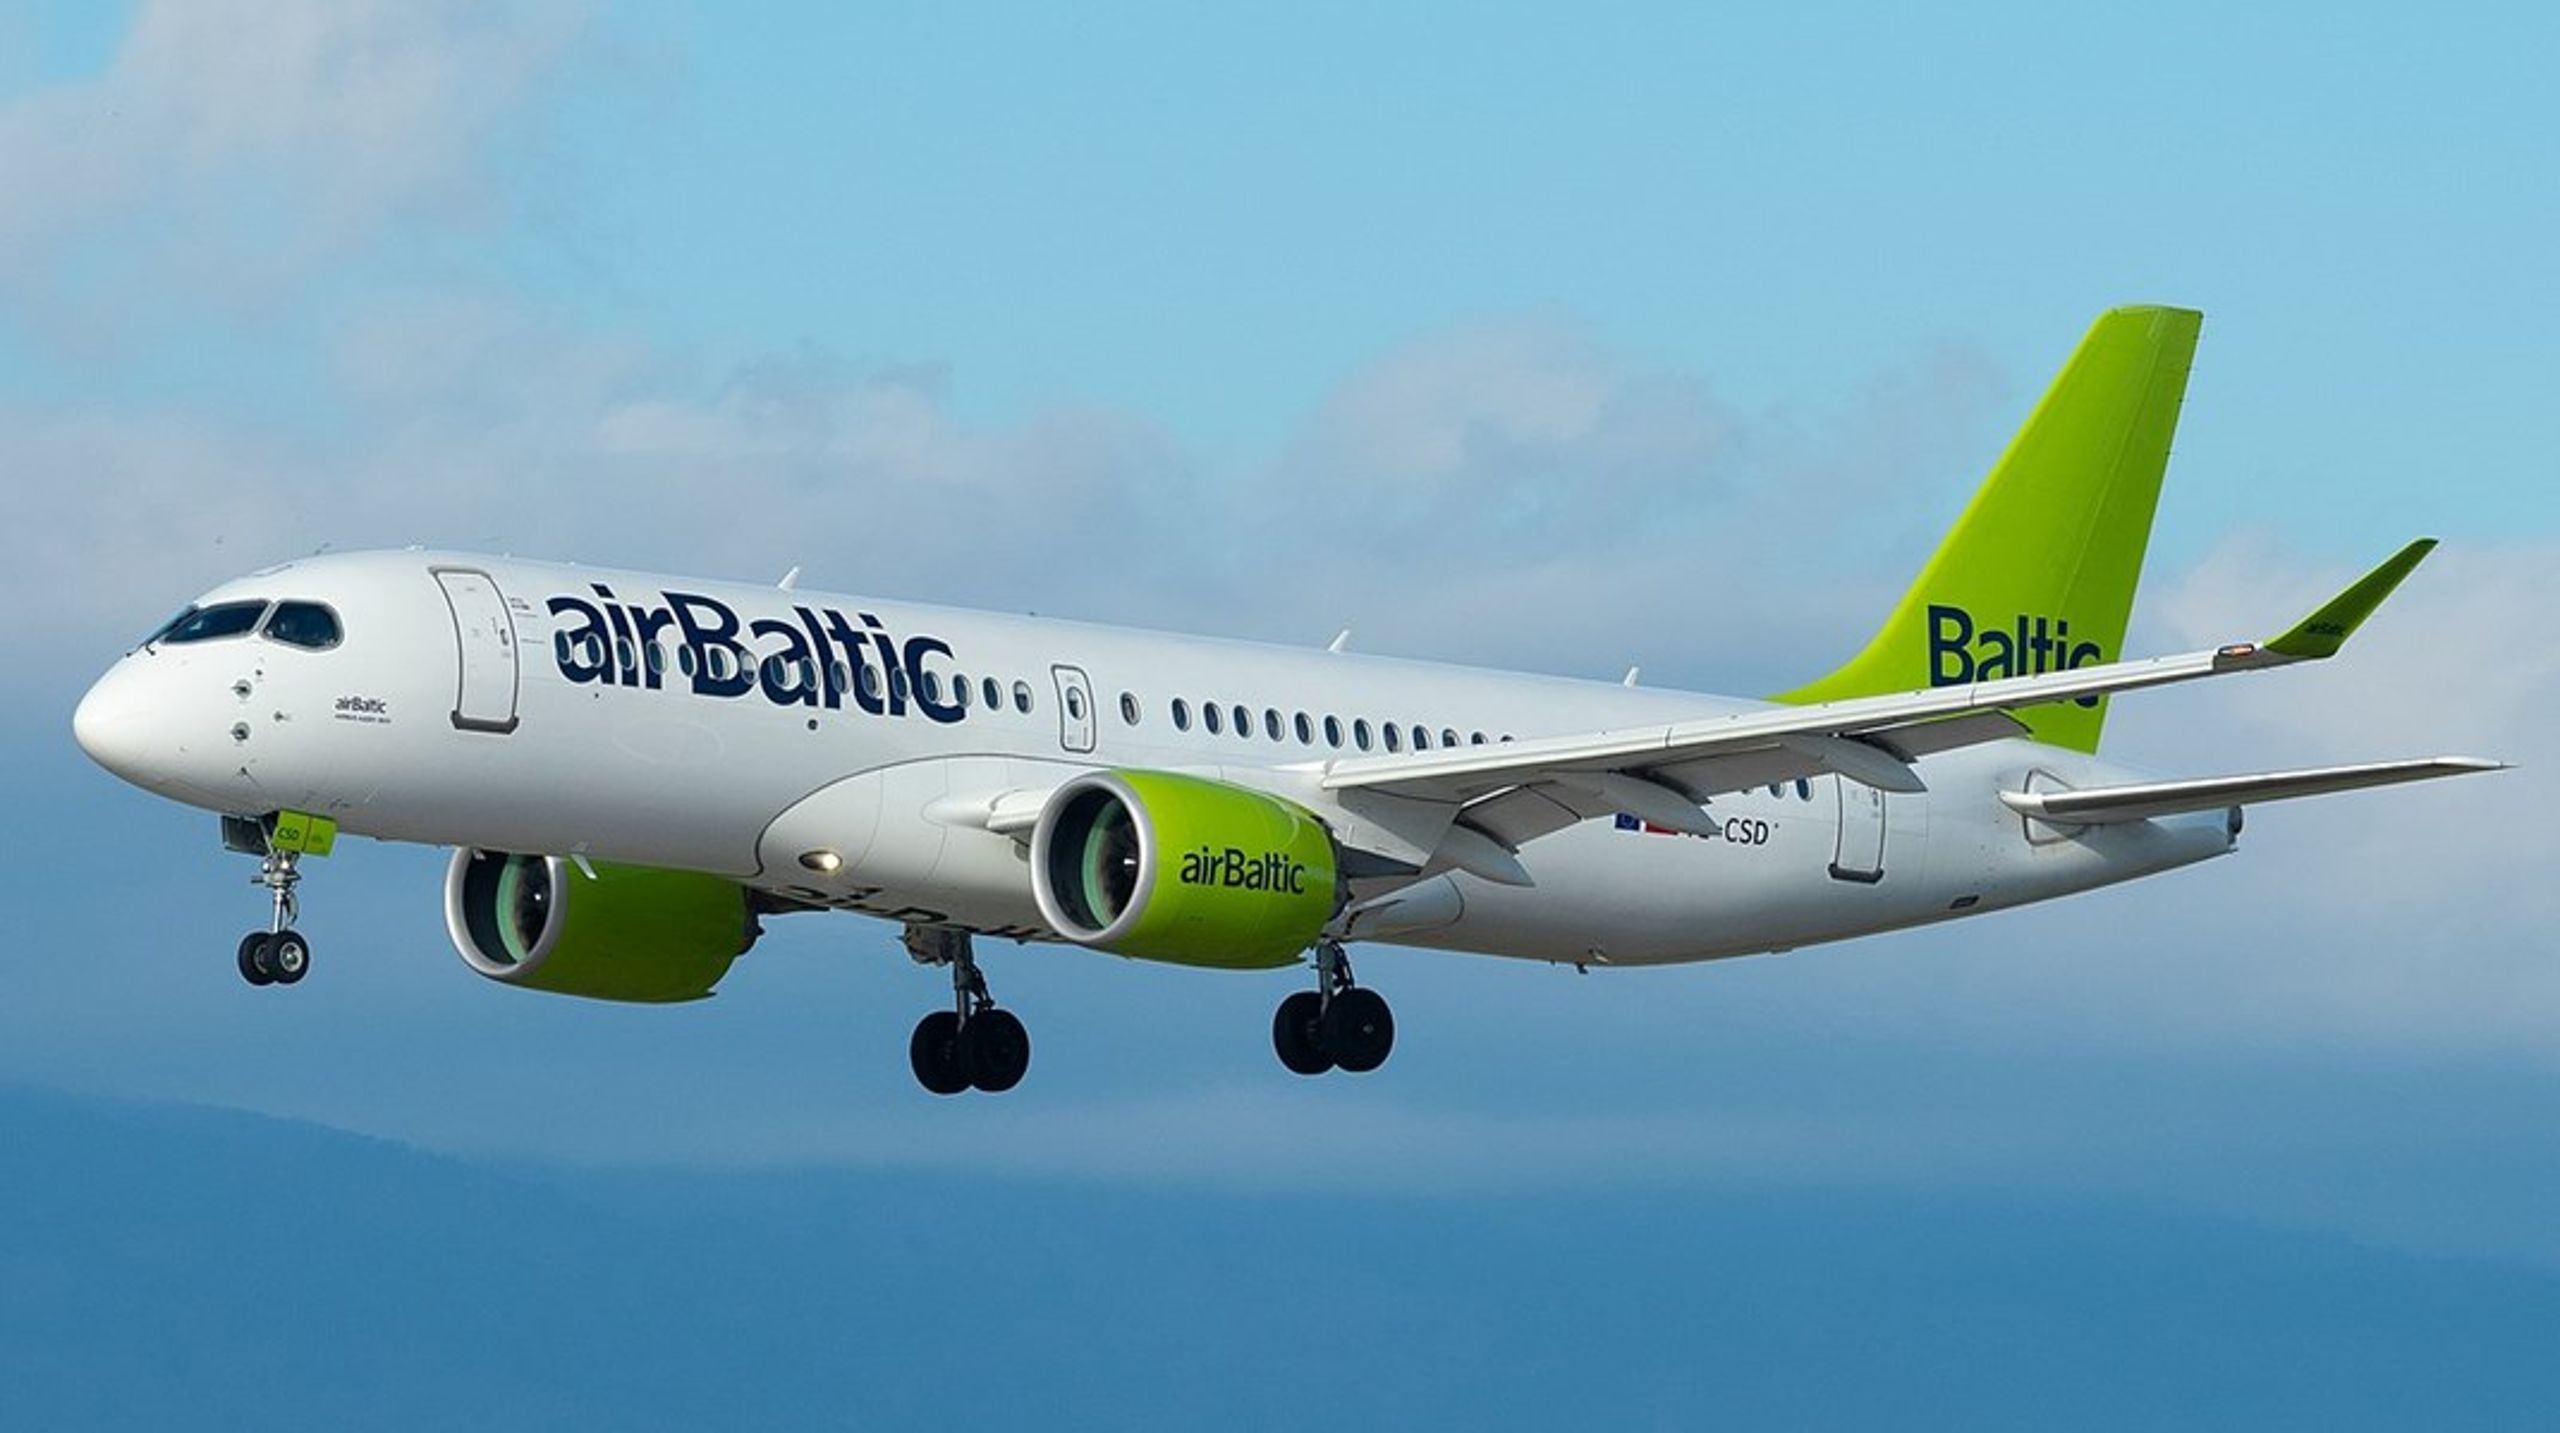 "Think green, fly green,” lyder AirBaltics slogan. Sådan en markedsføring vil næppe gå under en kommende EU-lov mod greenwashing, vurderer advokat Claus Barrett Christiansen.&nbsp;